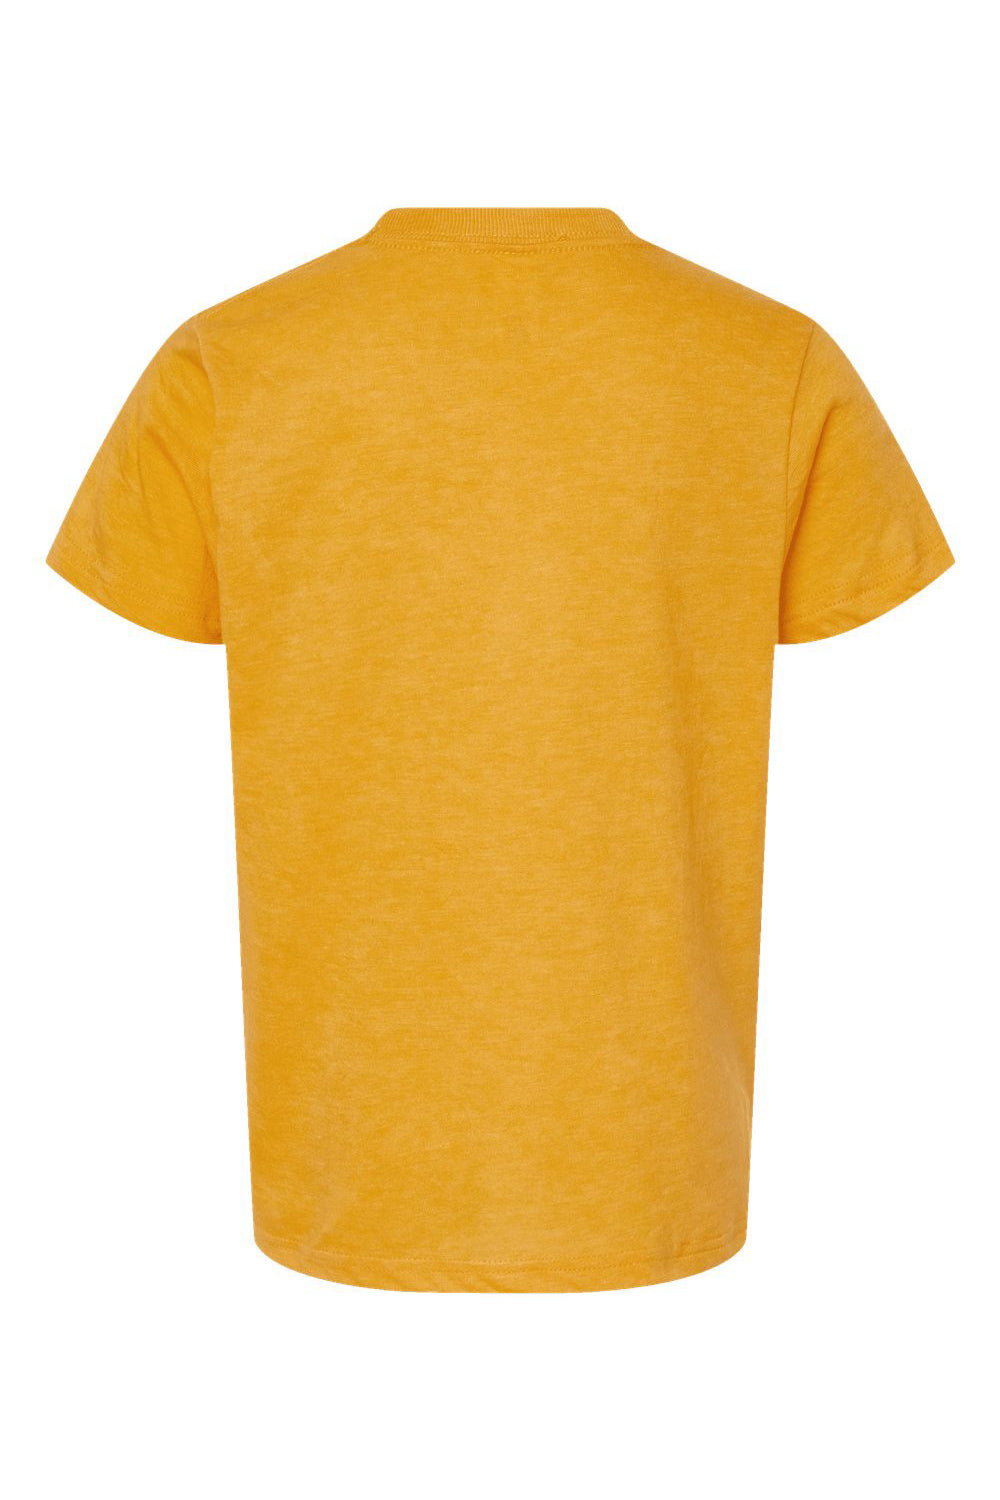 Tultex 235 Youth Fine Jersey Short Sleeve Crewneck T-Shirt Heather Mellow Yellow Flat Back